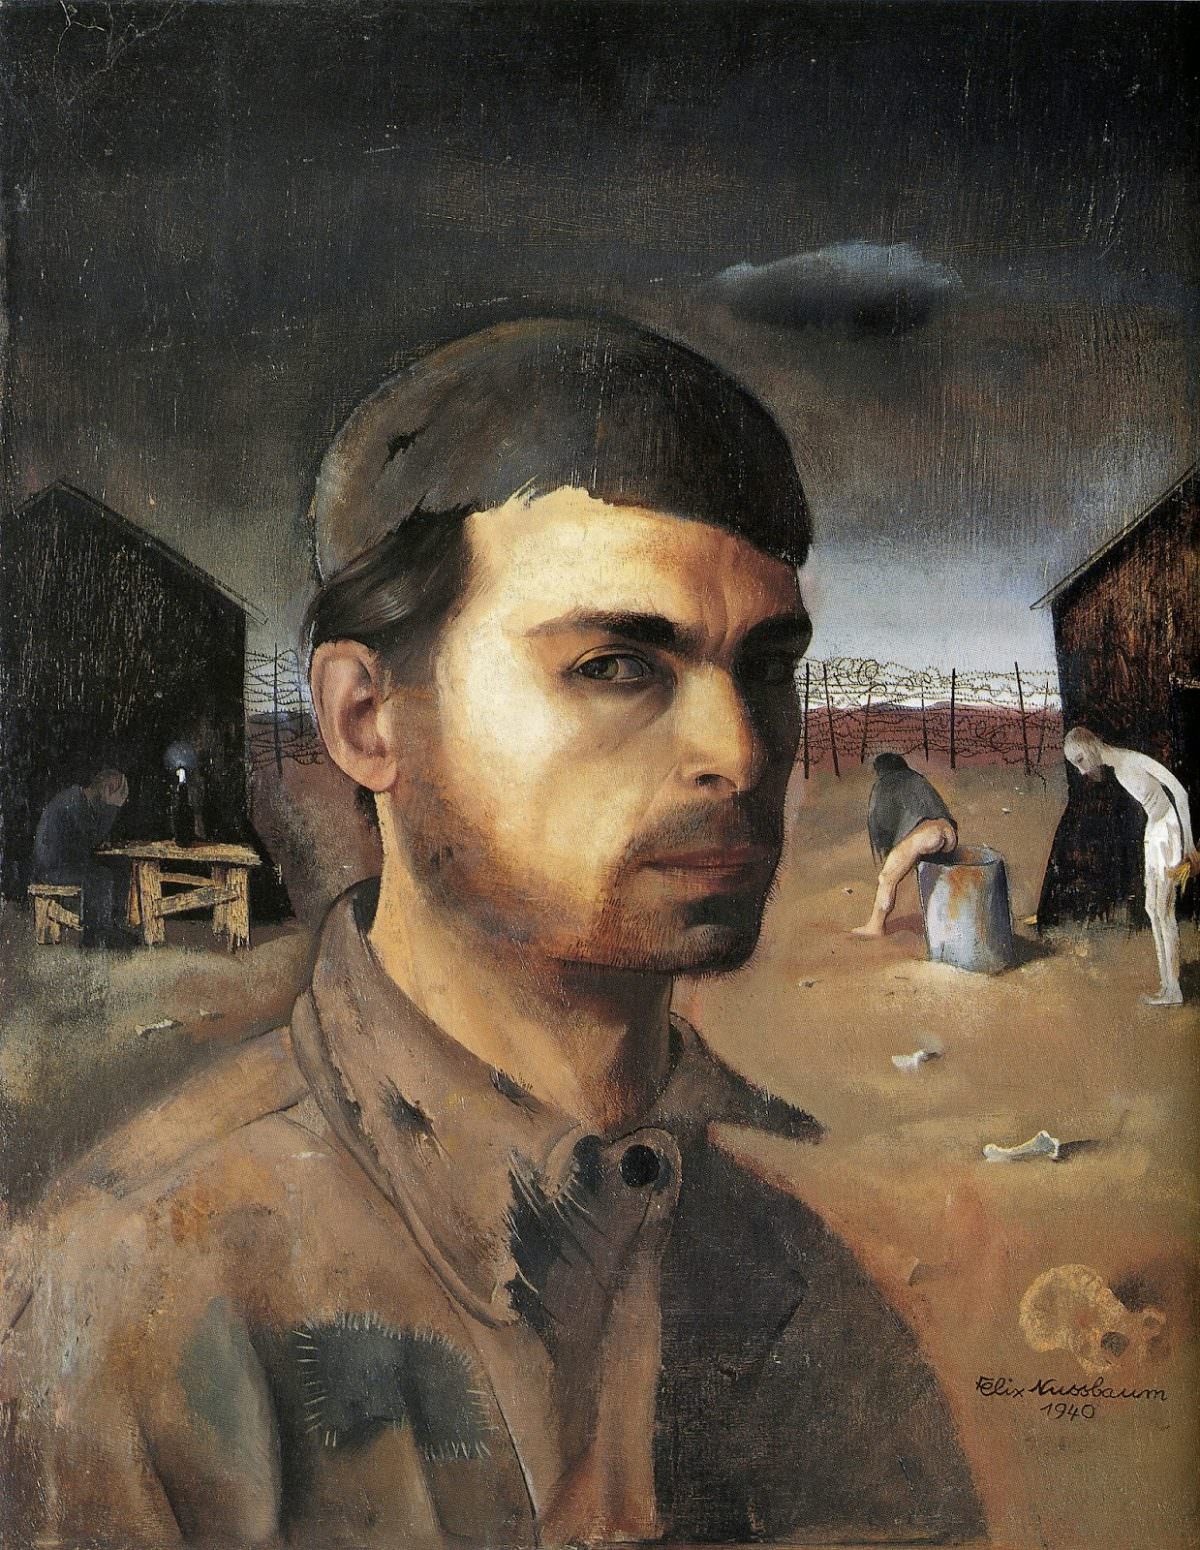 Self Portrait in the Camp, 1940